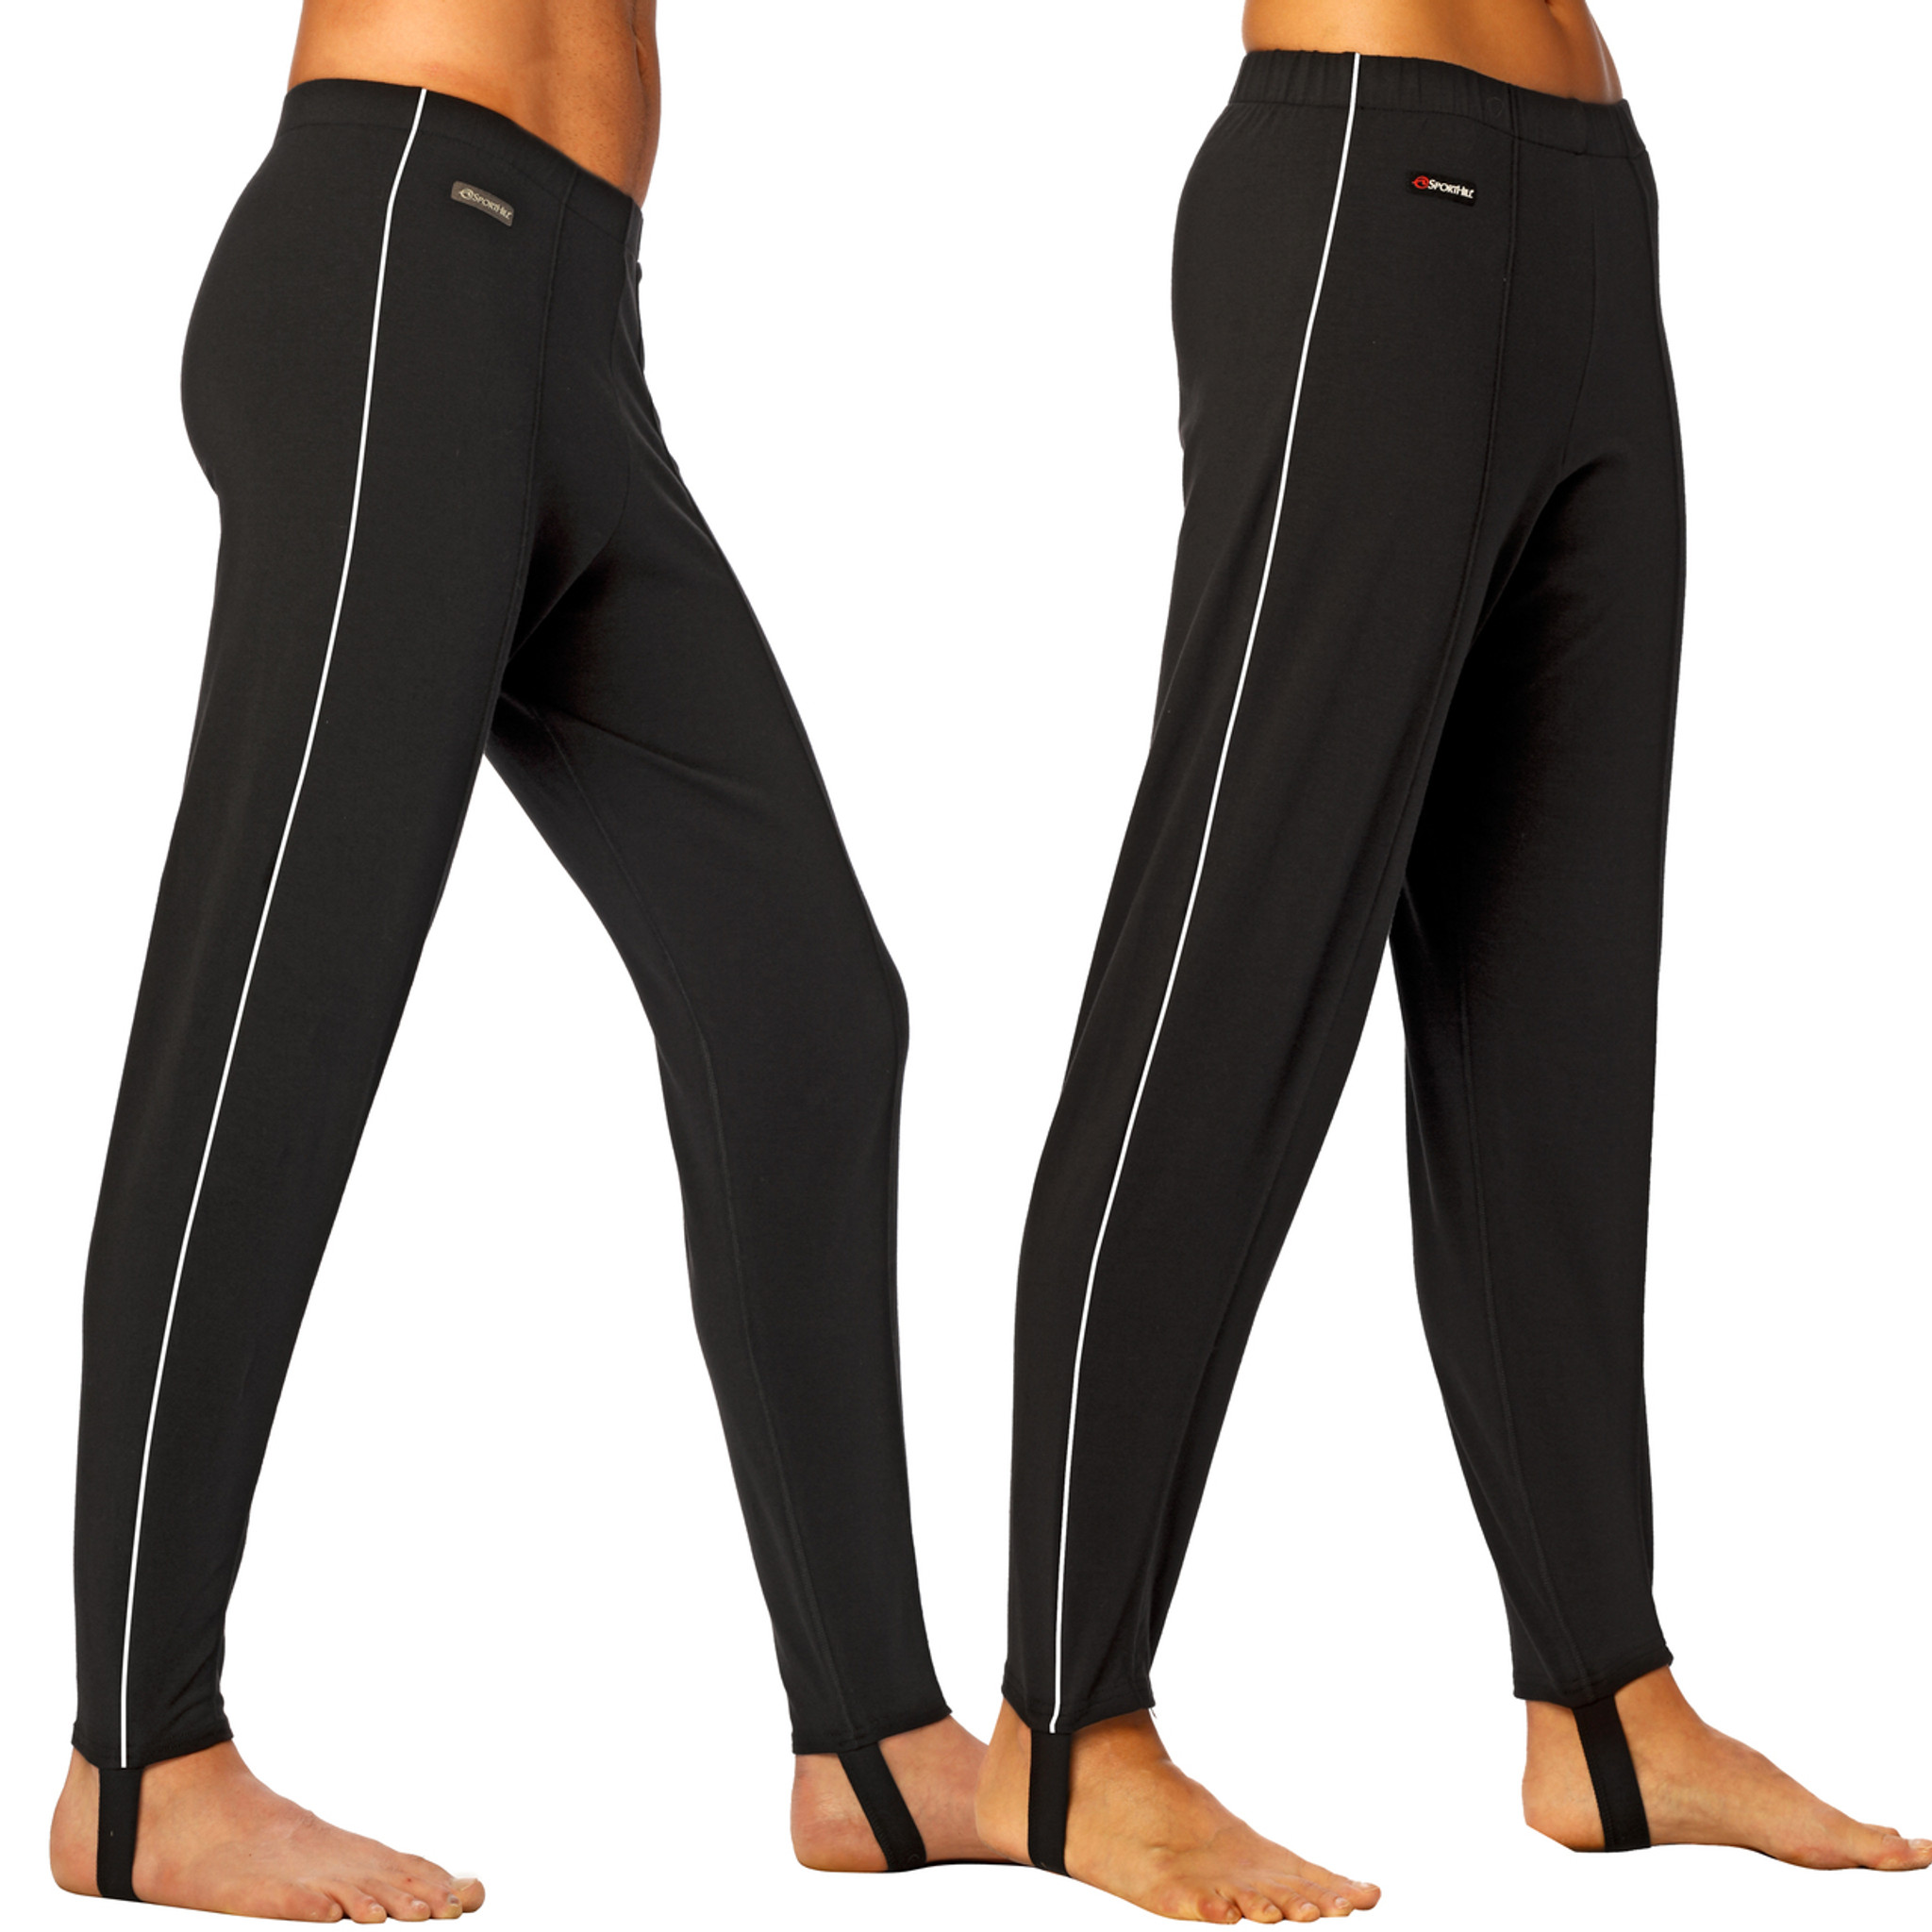 Women's 4-way stretch pants with stirrups